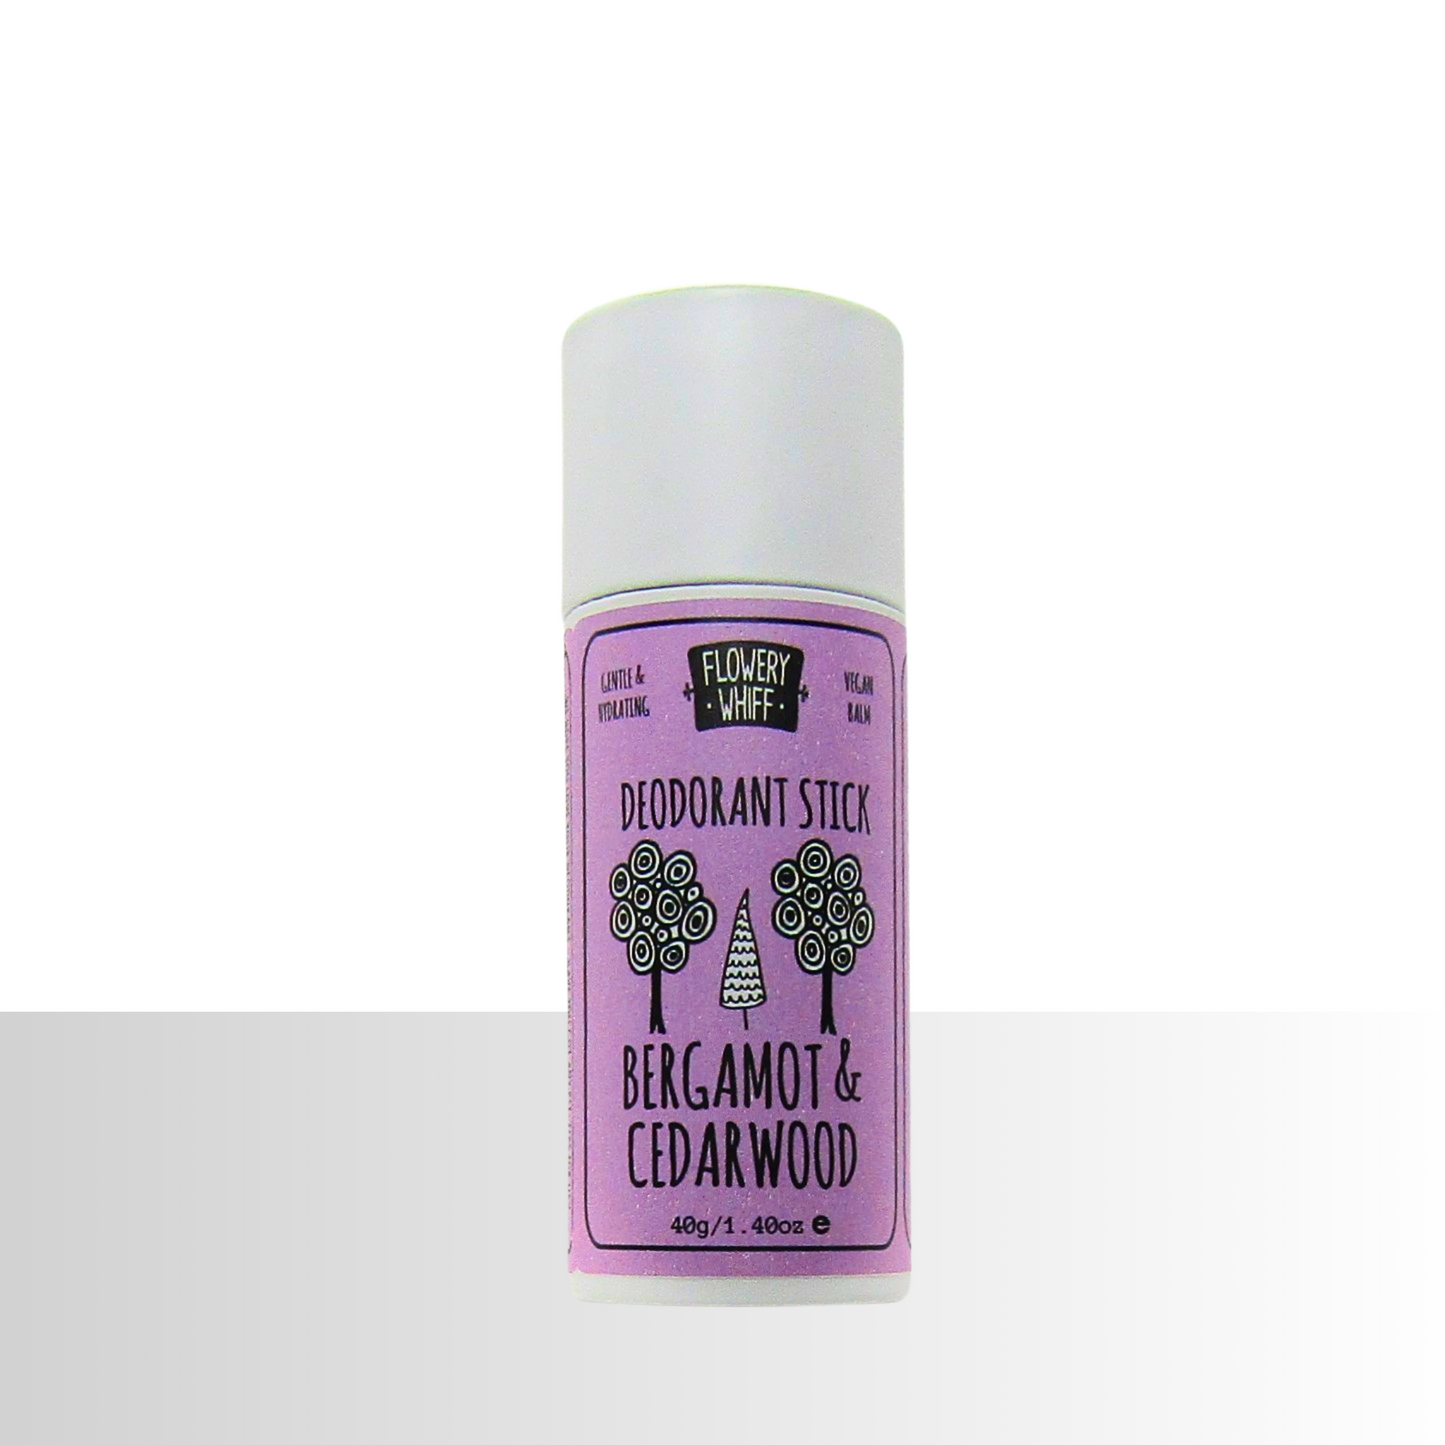 Bergamot & Cedarwood Vegan Deodorant Stick